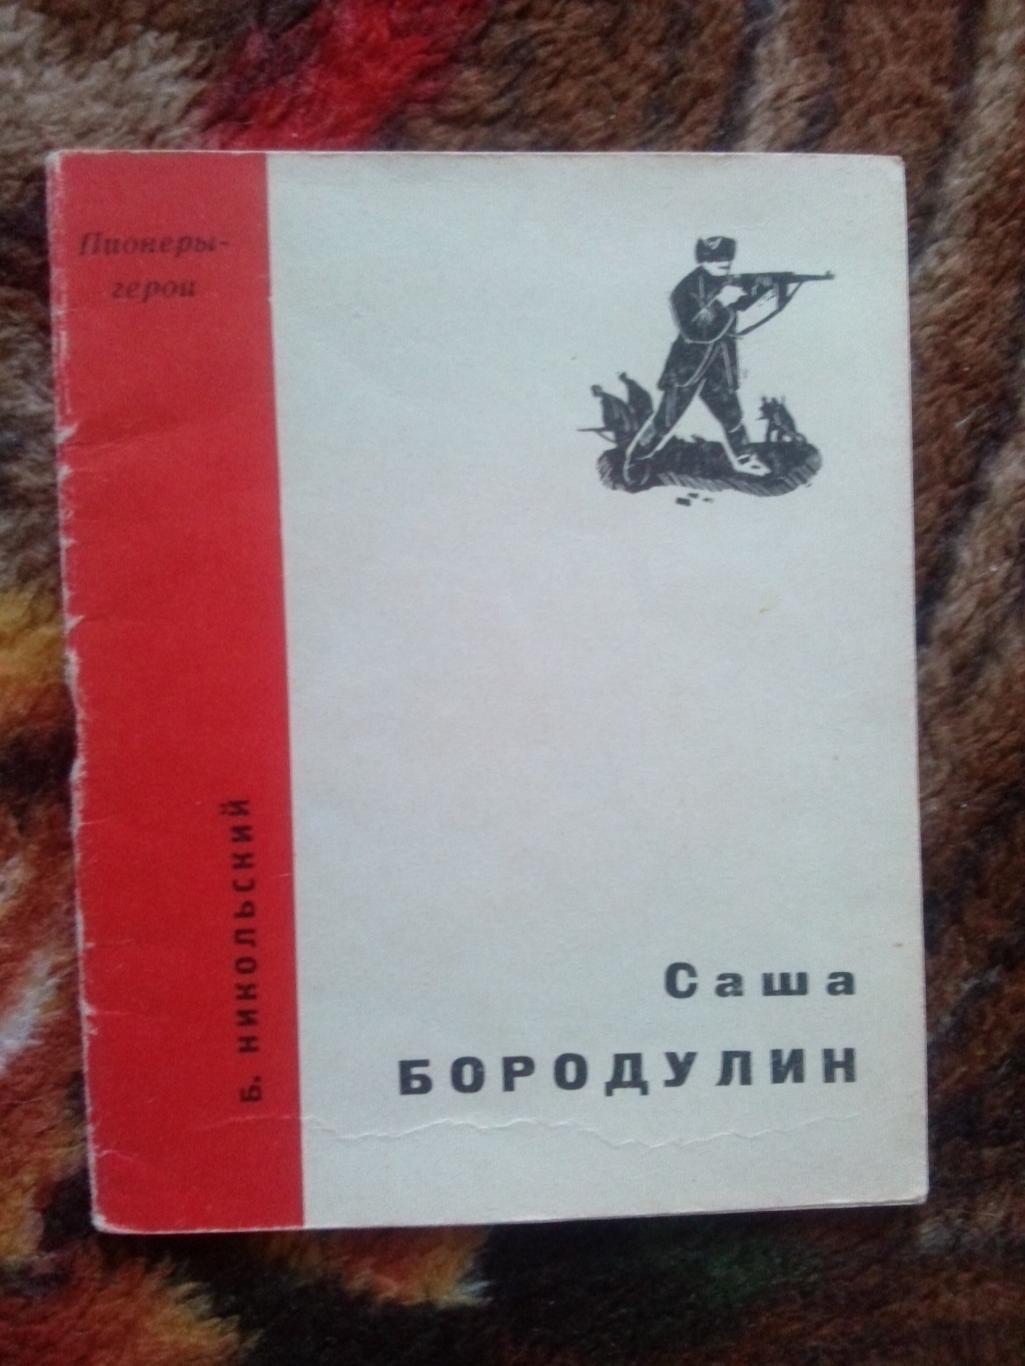 Пионеры-герои (Плакат + брошюра) 1967 г. Саша Бородулин (Пионер , агитация) 3